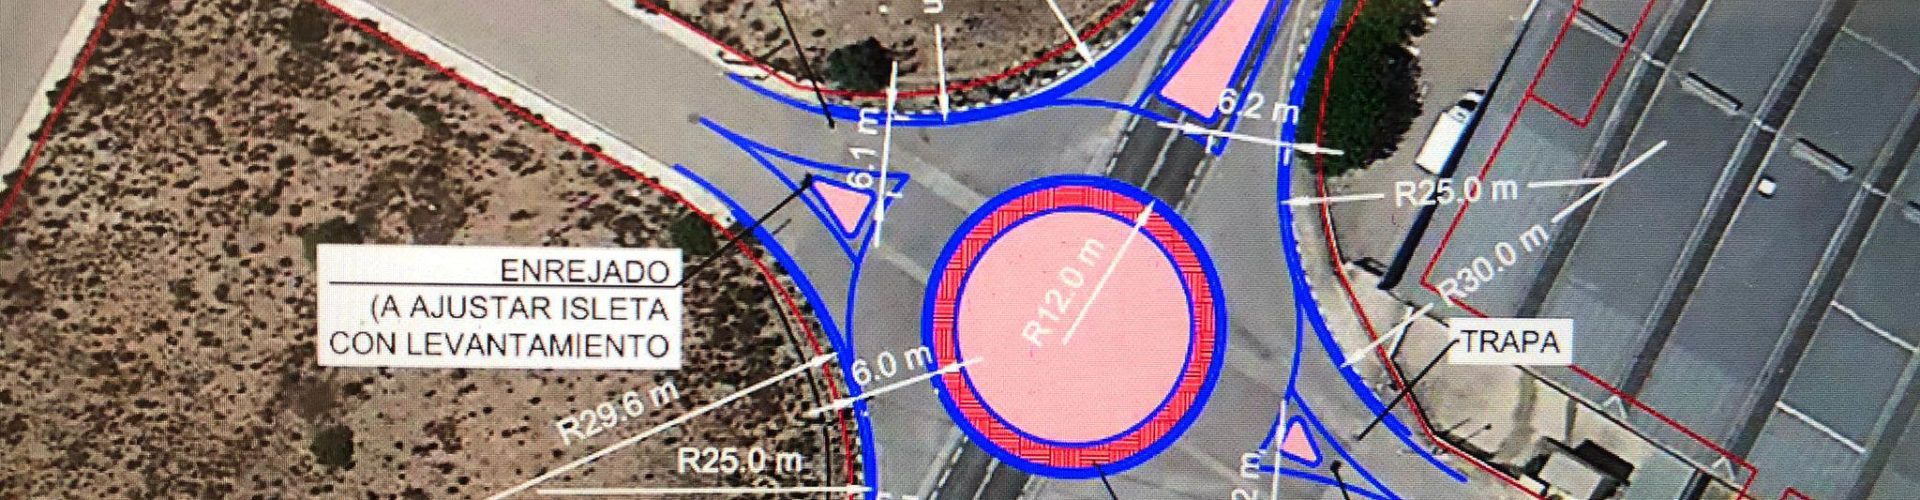 La Generalitat Valenciana construirà una rotonda al polígon de Planes Altes de Vinaròs